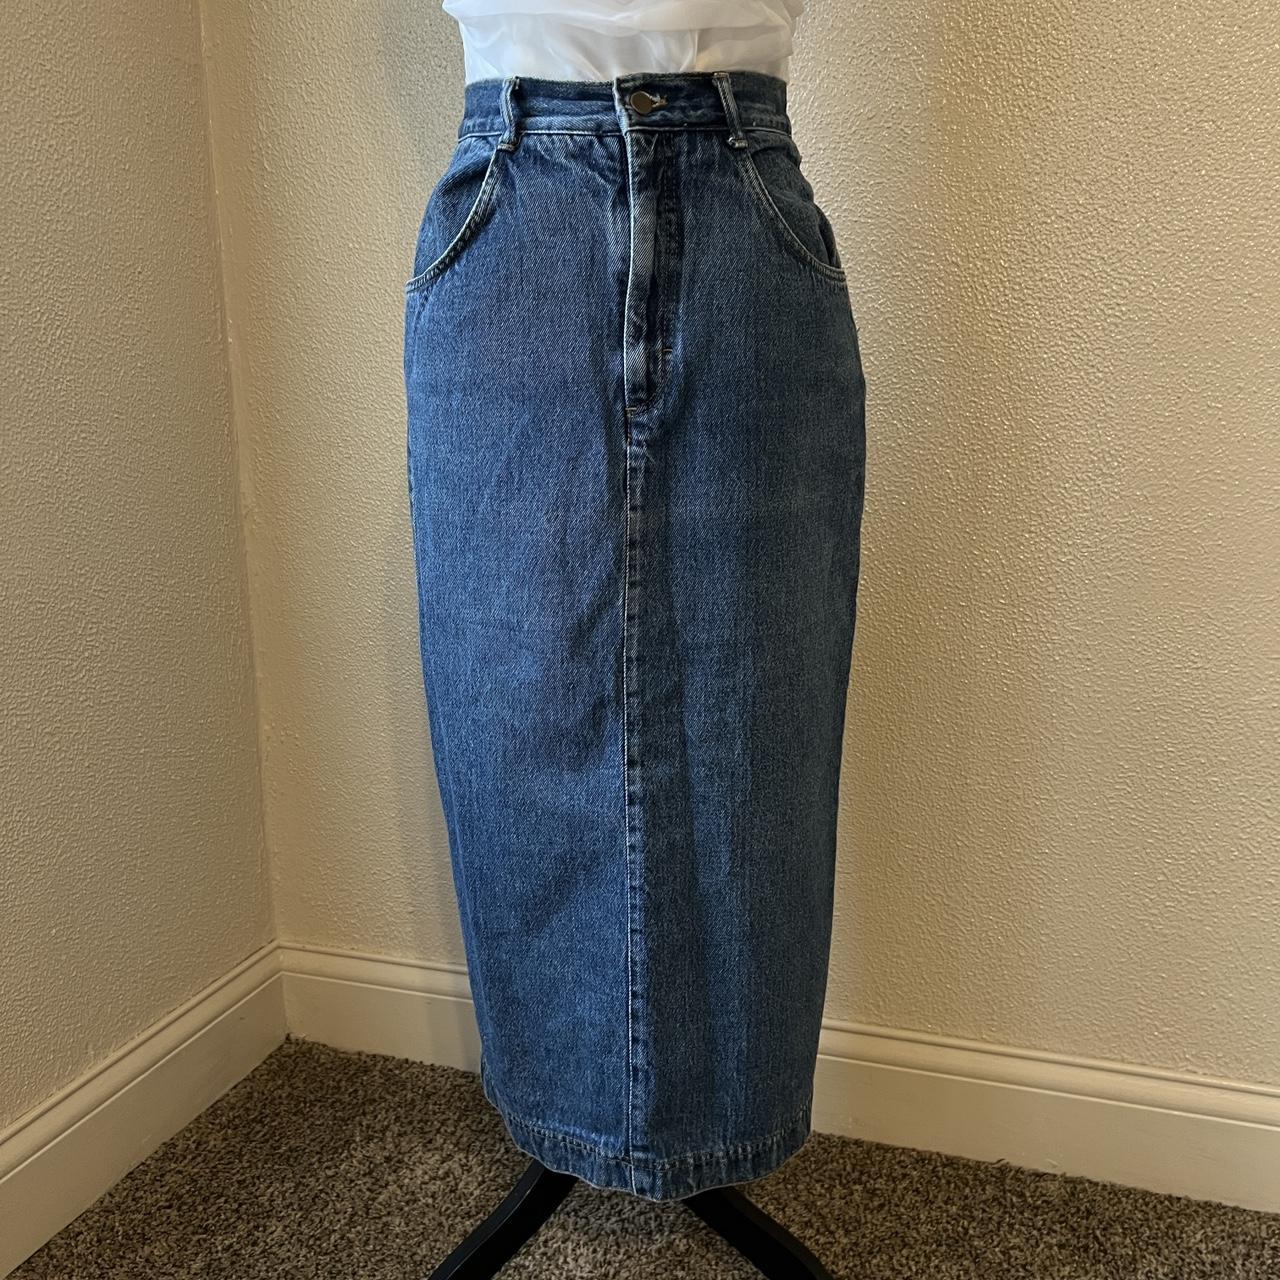 Vintage PS Gitano jeans skirt high waist denim 1980s 80s size 16 30” waist  | eBay